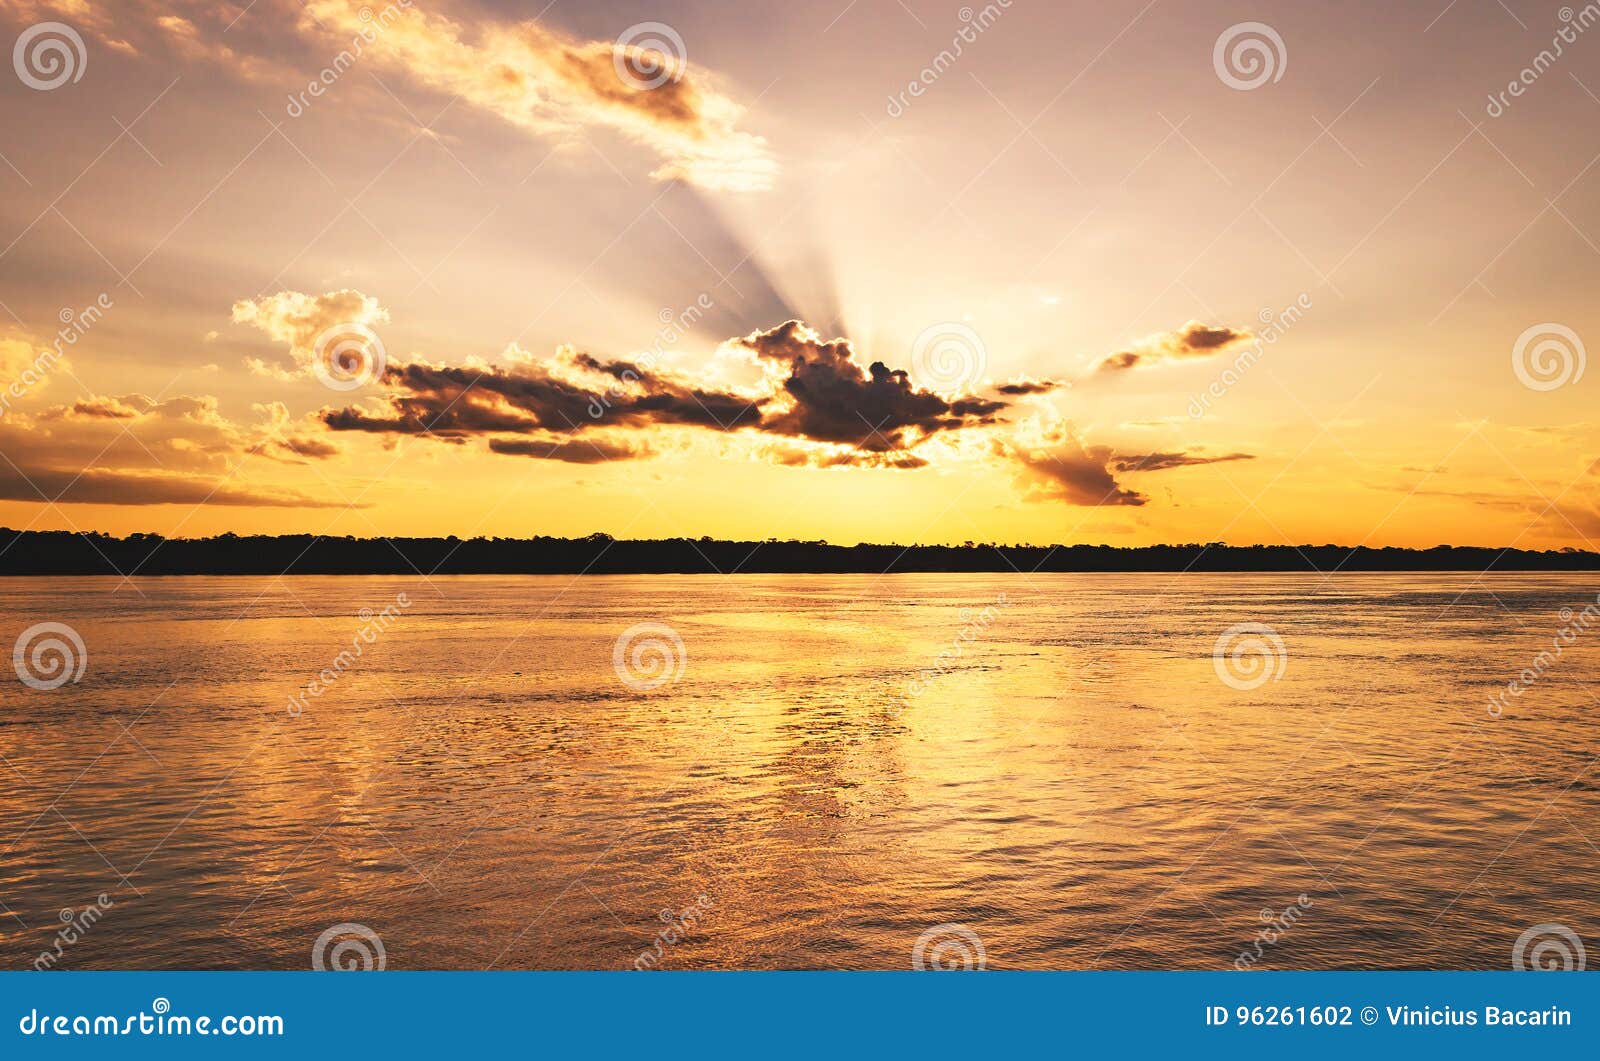 amazing sunset at rio madeira in porto velho ro brazil